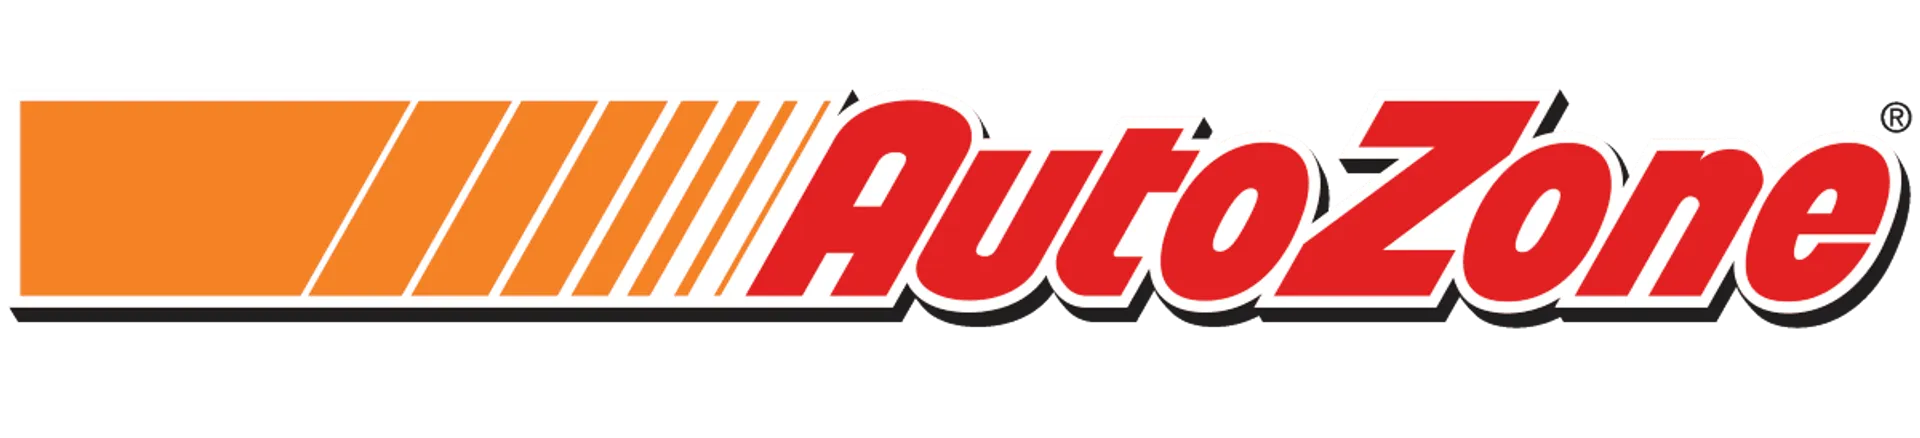 AUTOZONE logo